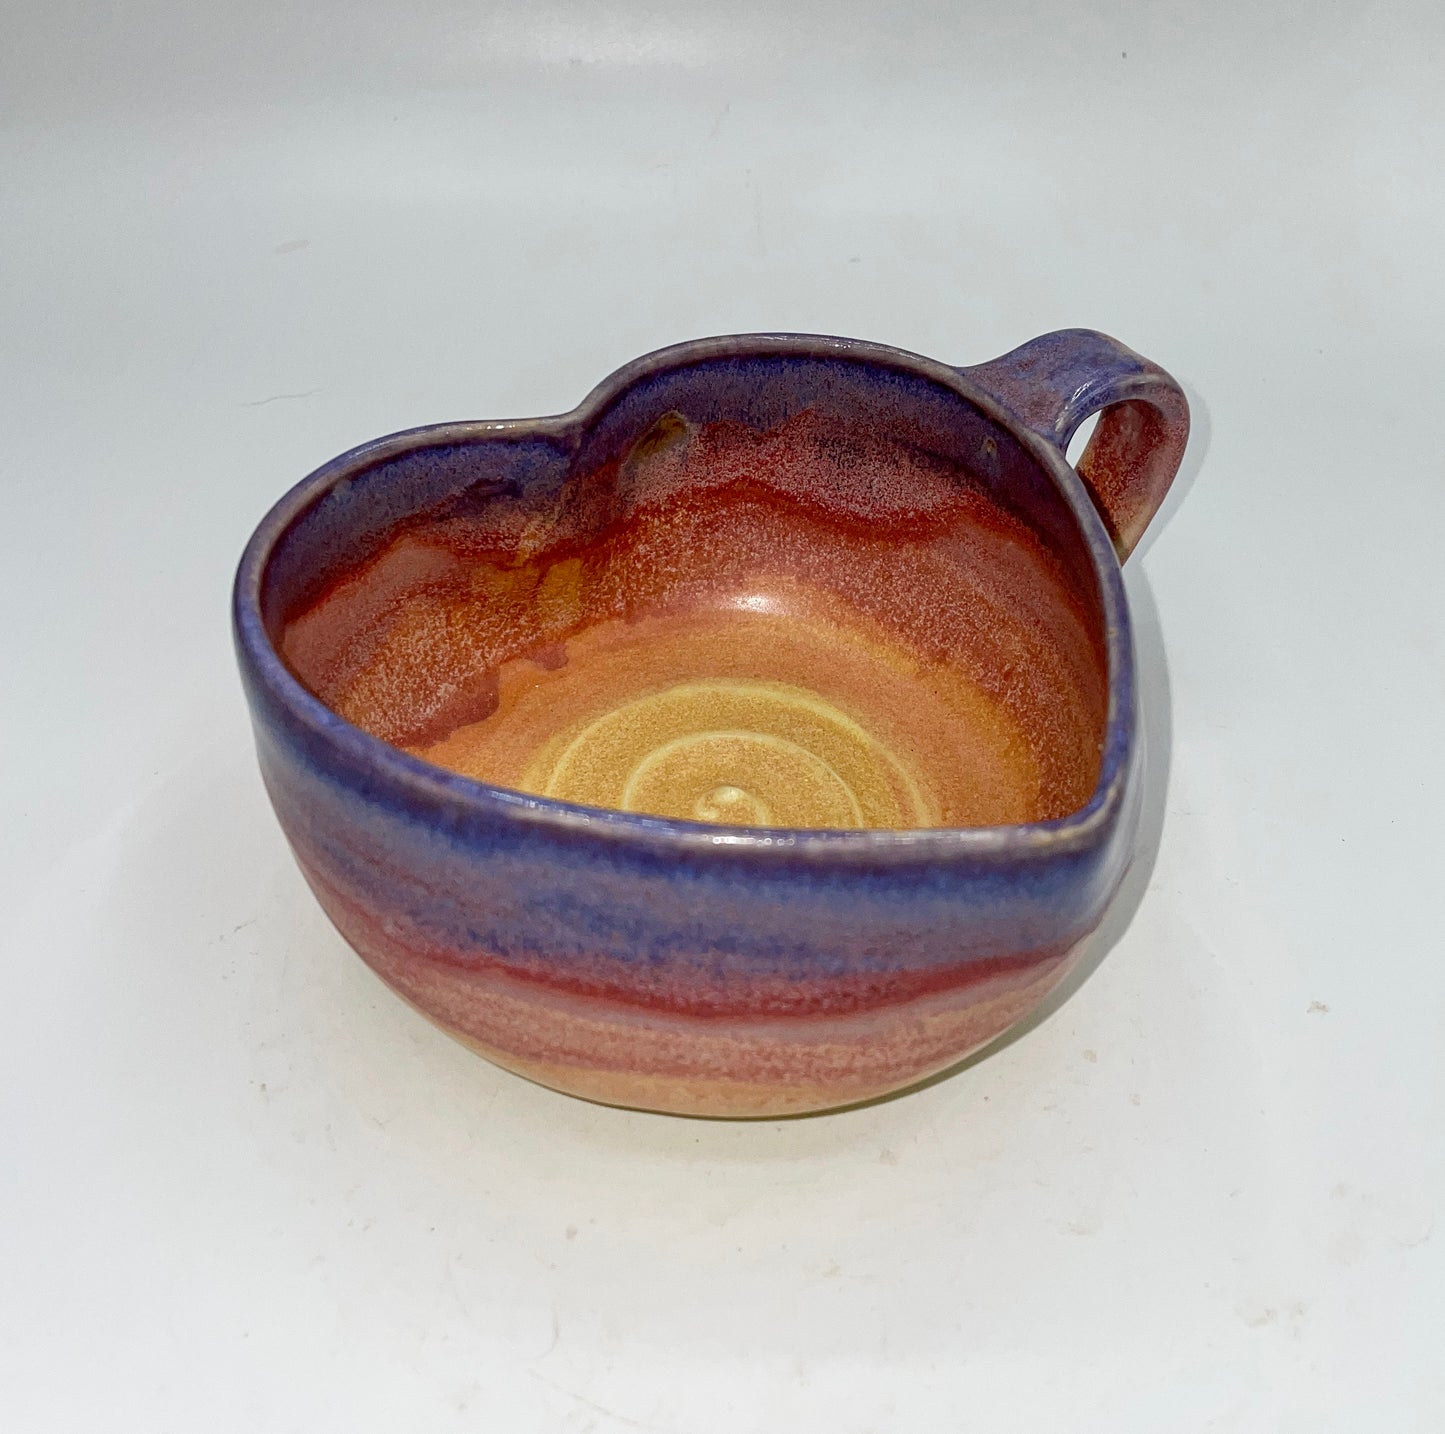 A Sunset Heart Soup Mug